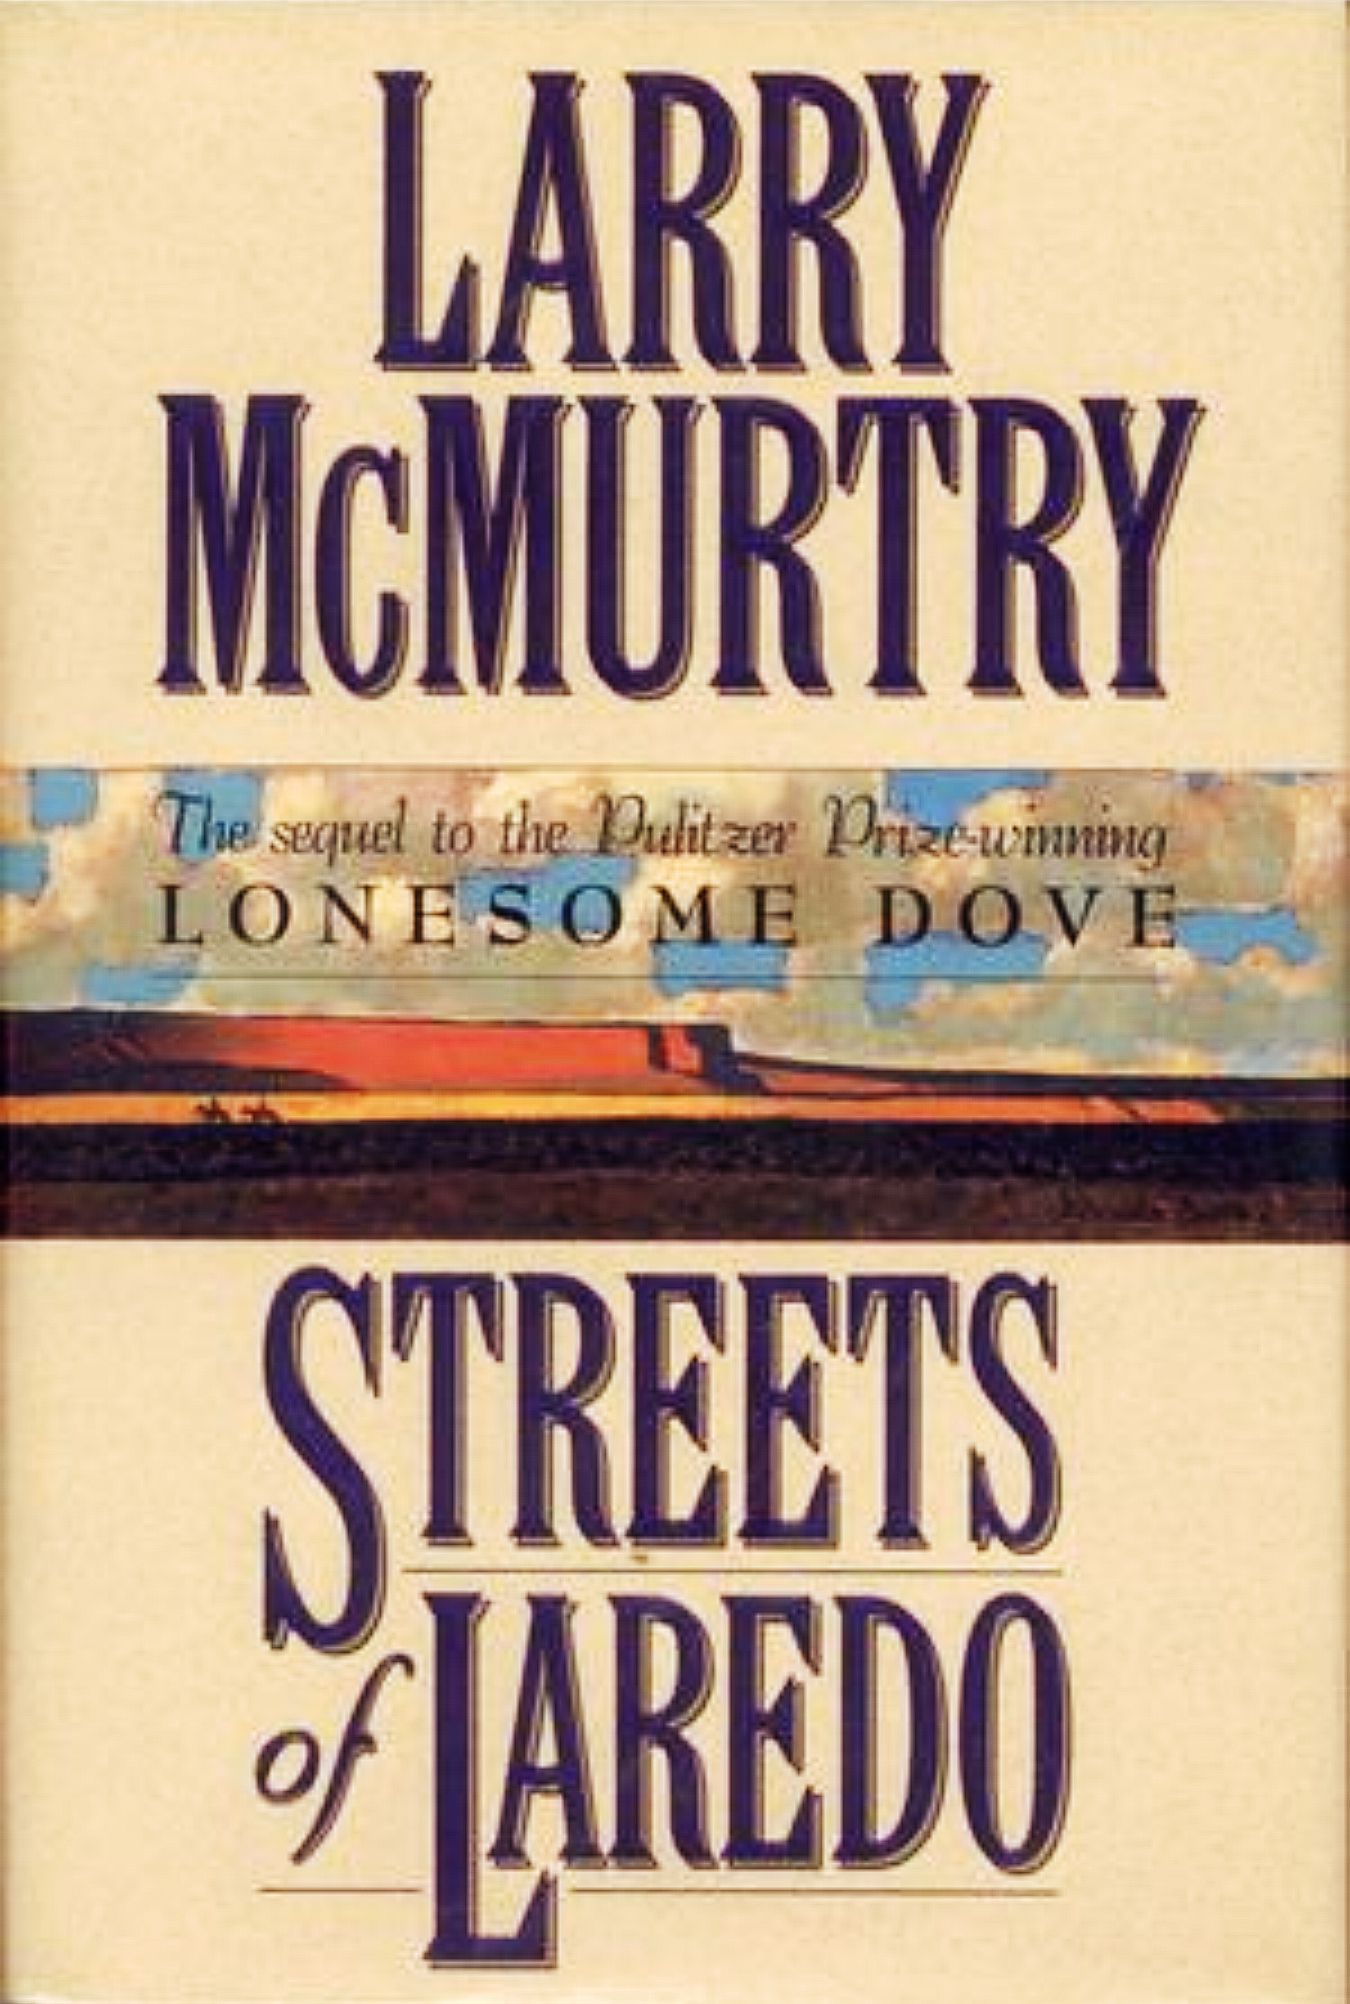 LARRY MCMURTRY STREETS OF LAREDO